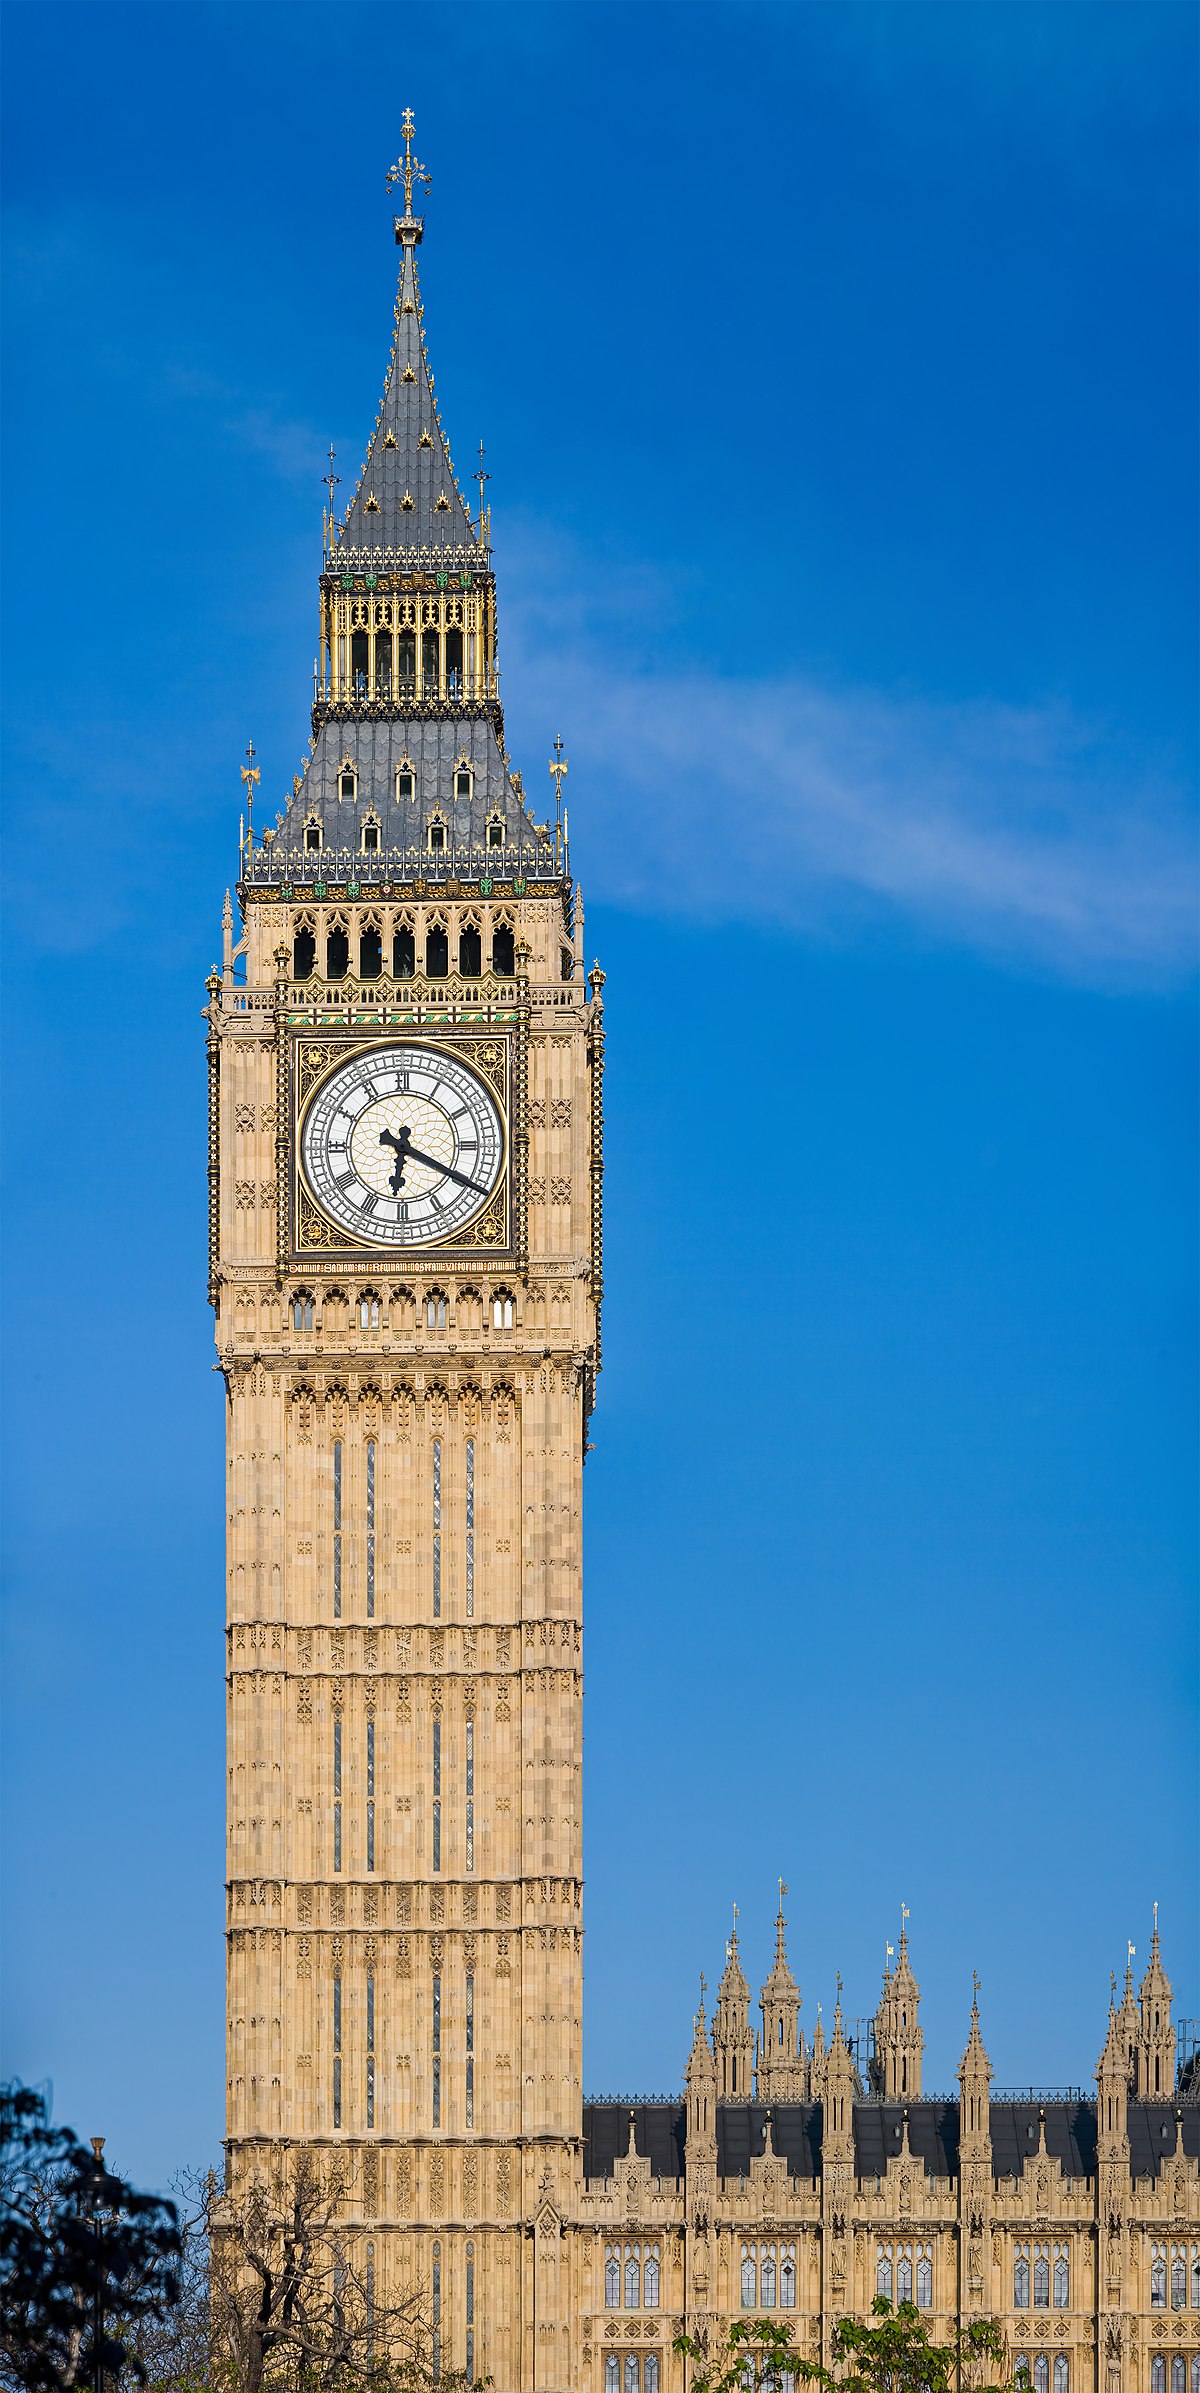 Ficheiro:Clock Tower - Palace of Westminster, London - May 2007.jpg –  Wikipédia, a enciclopédia livre